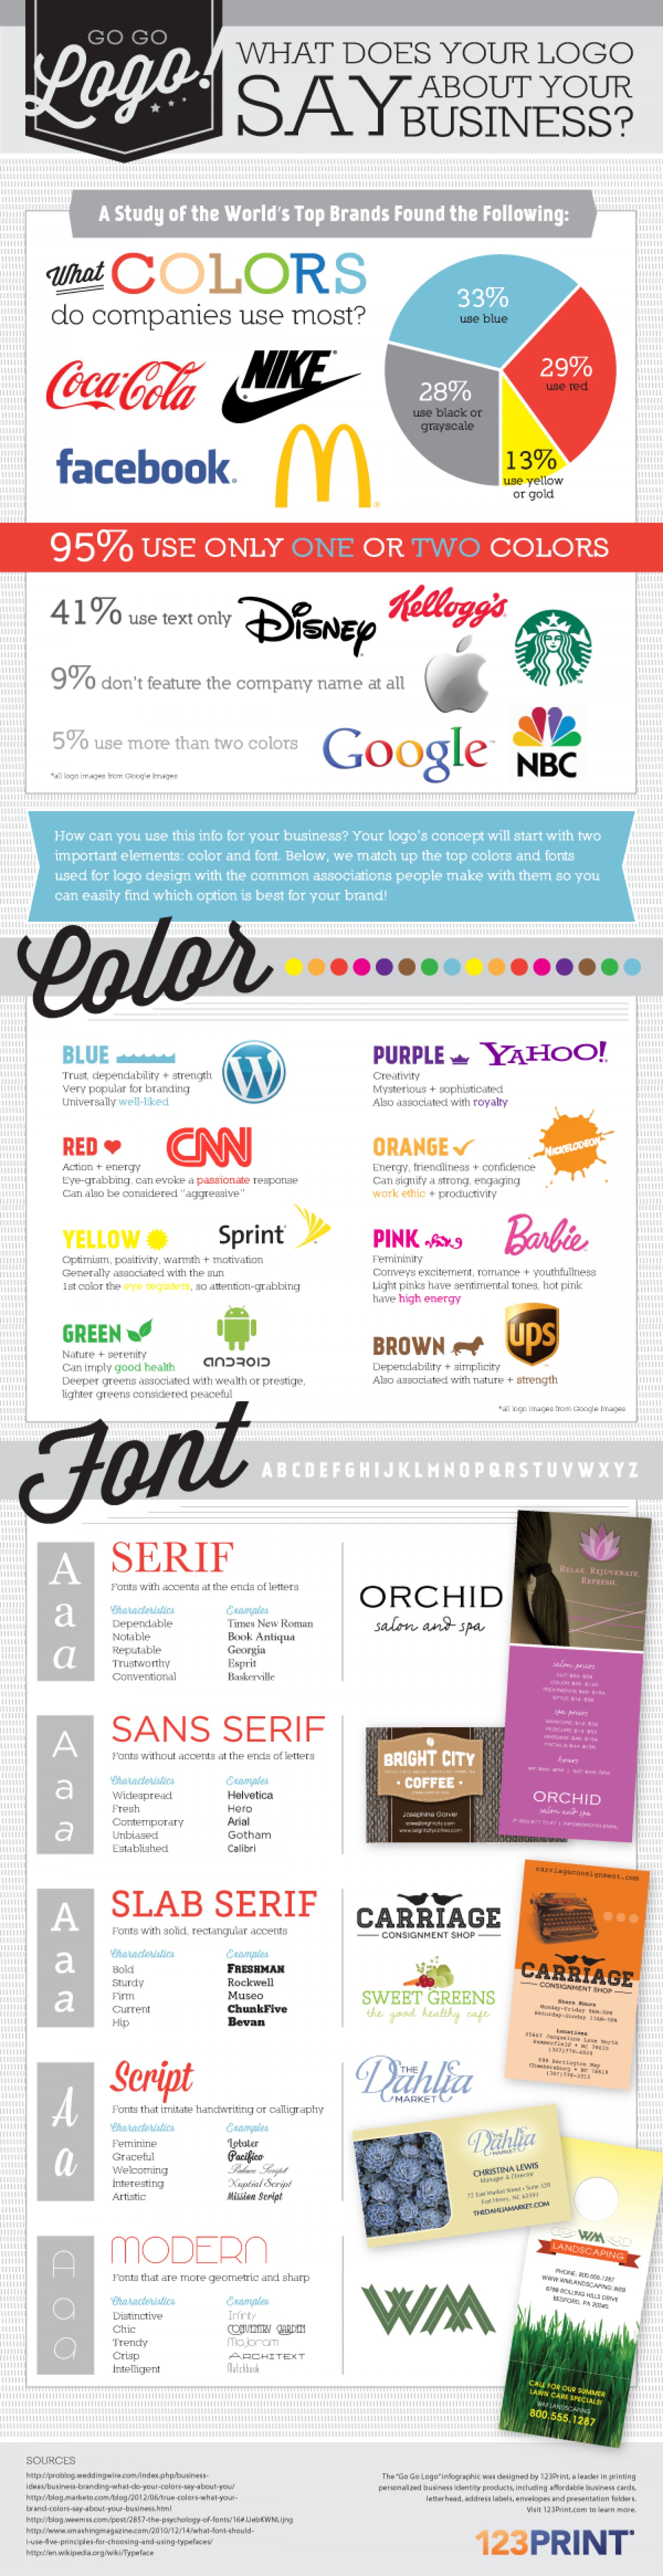 Logos Making Your Brand Pop